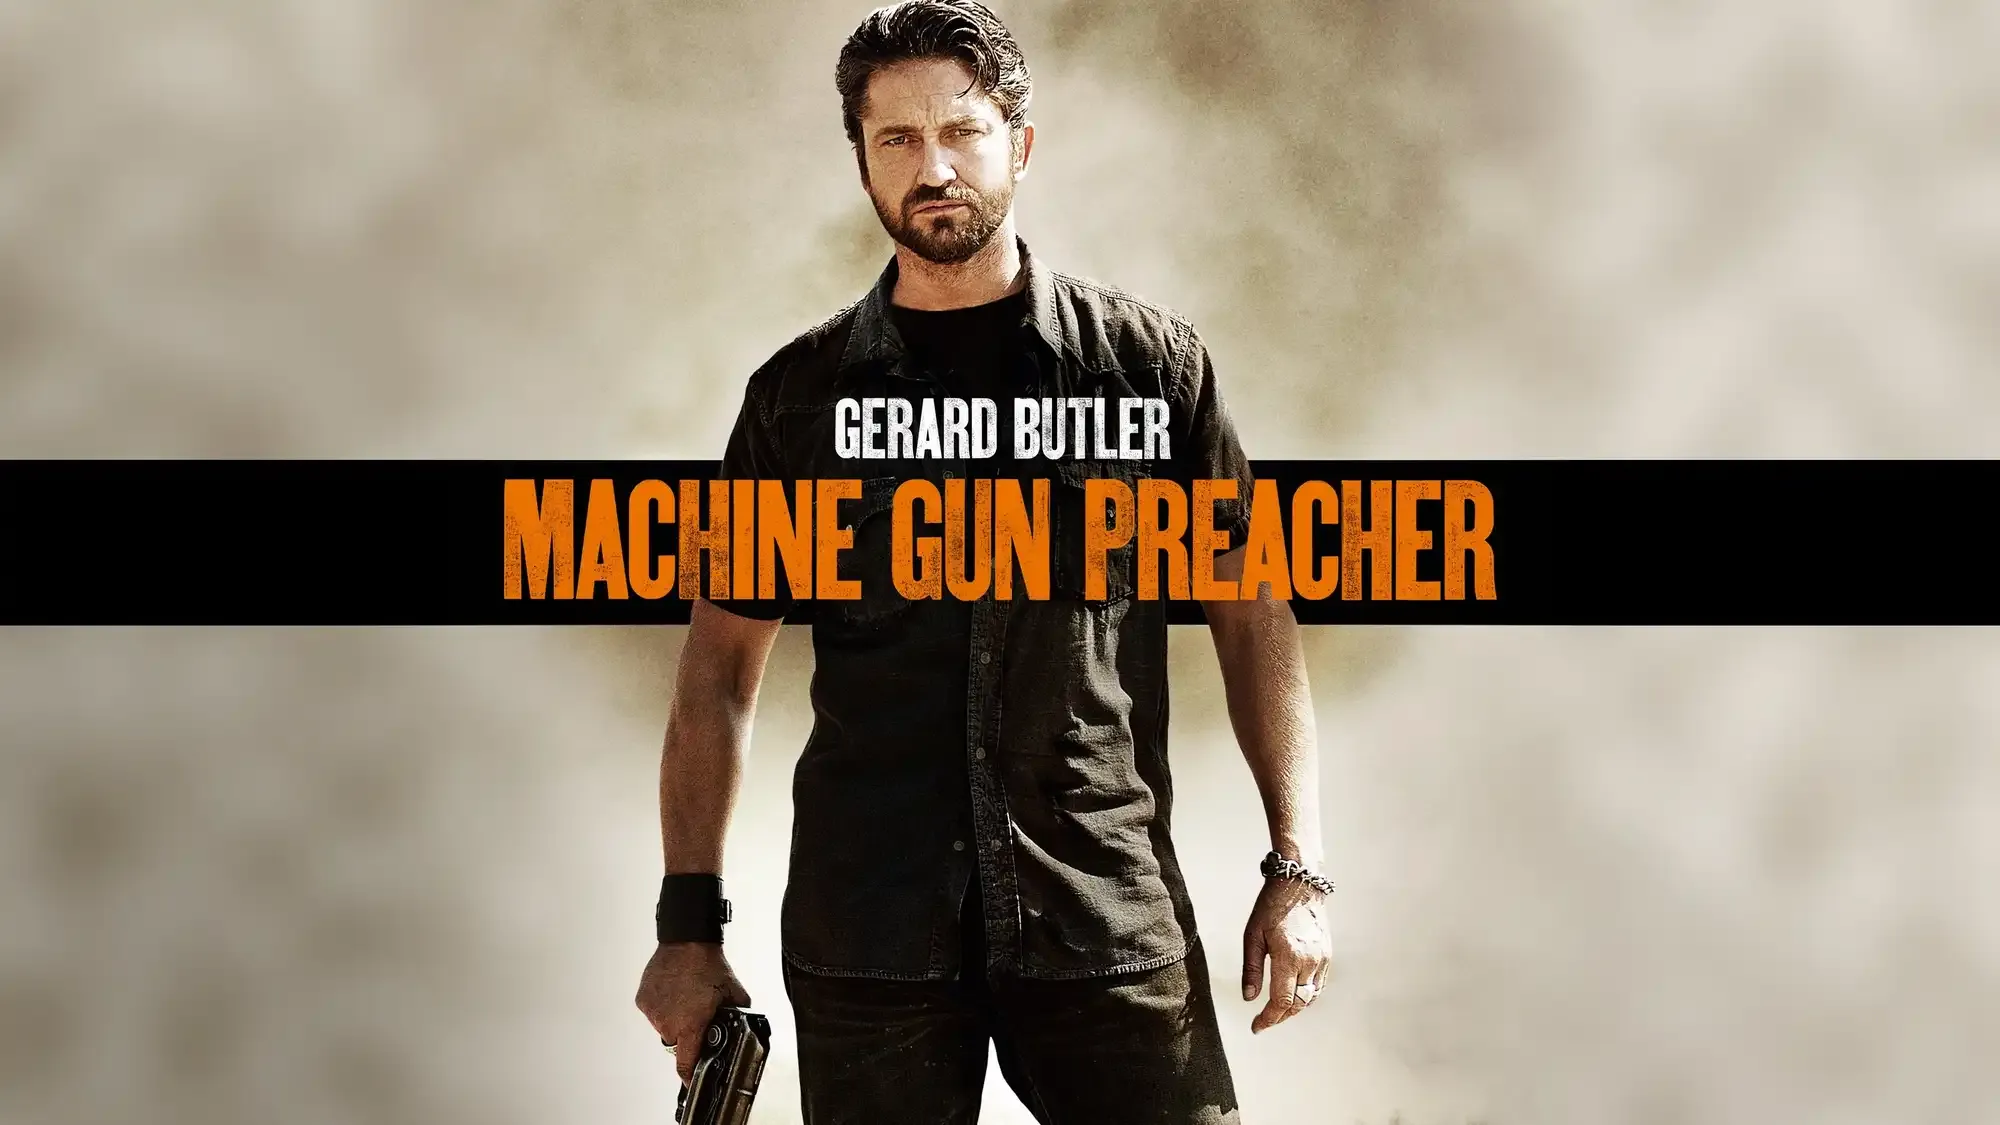 Machine Gun Preacher movie review